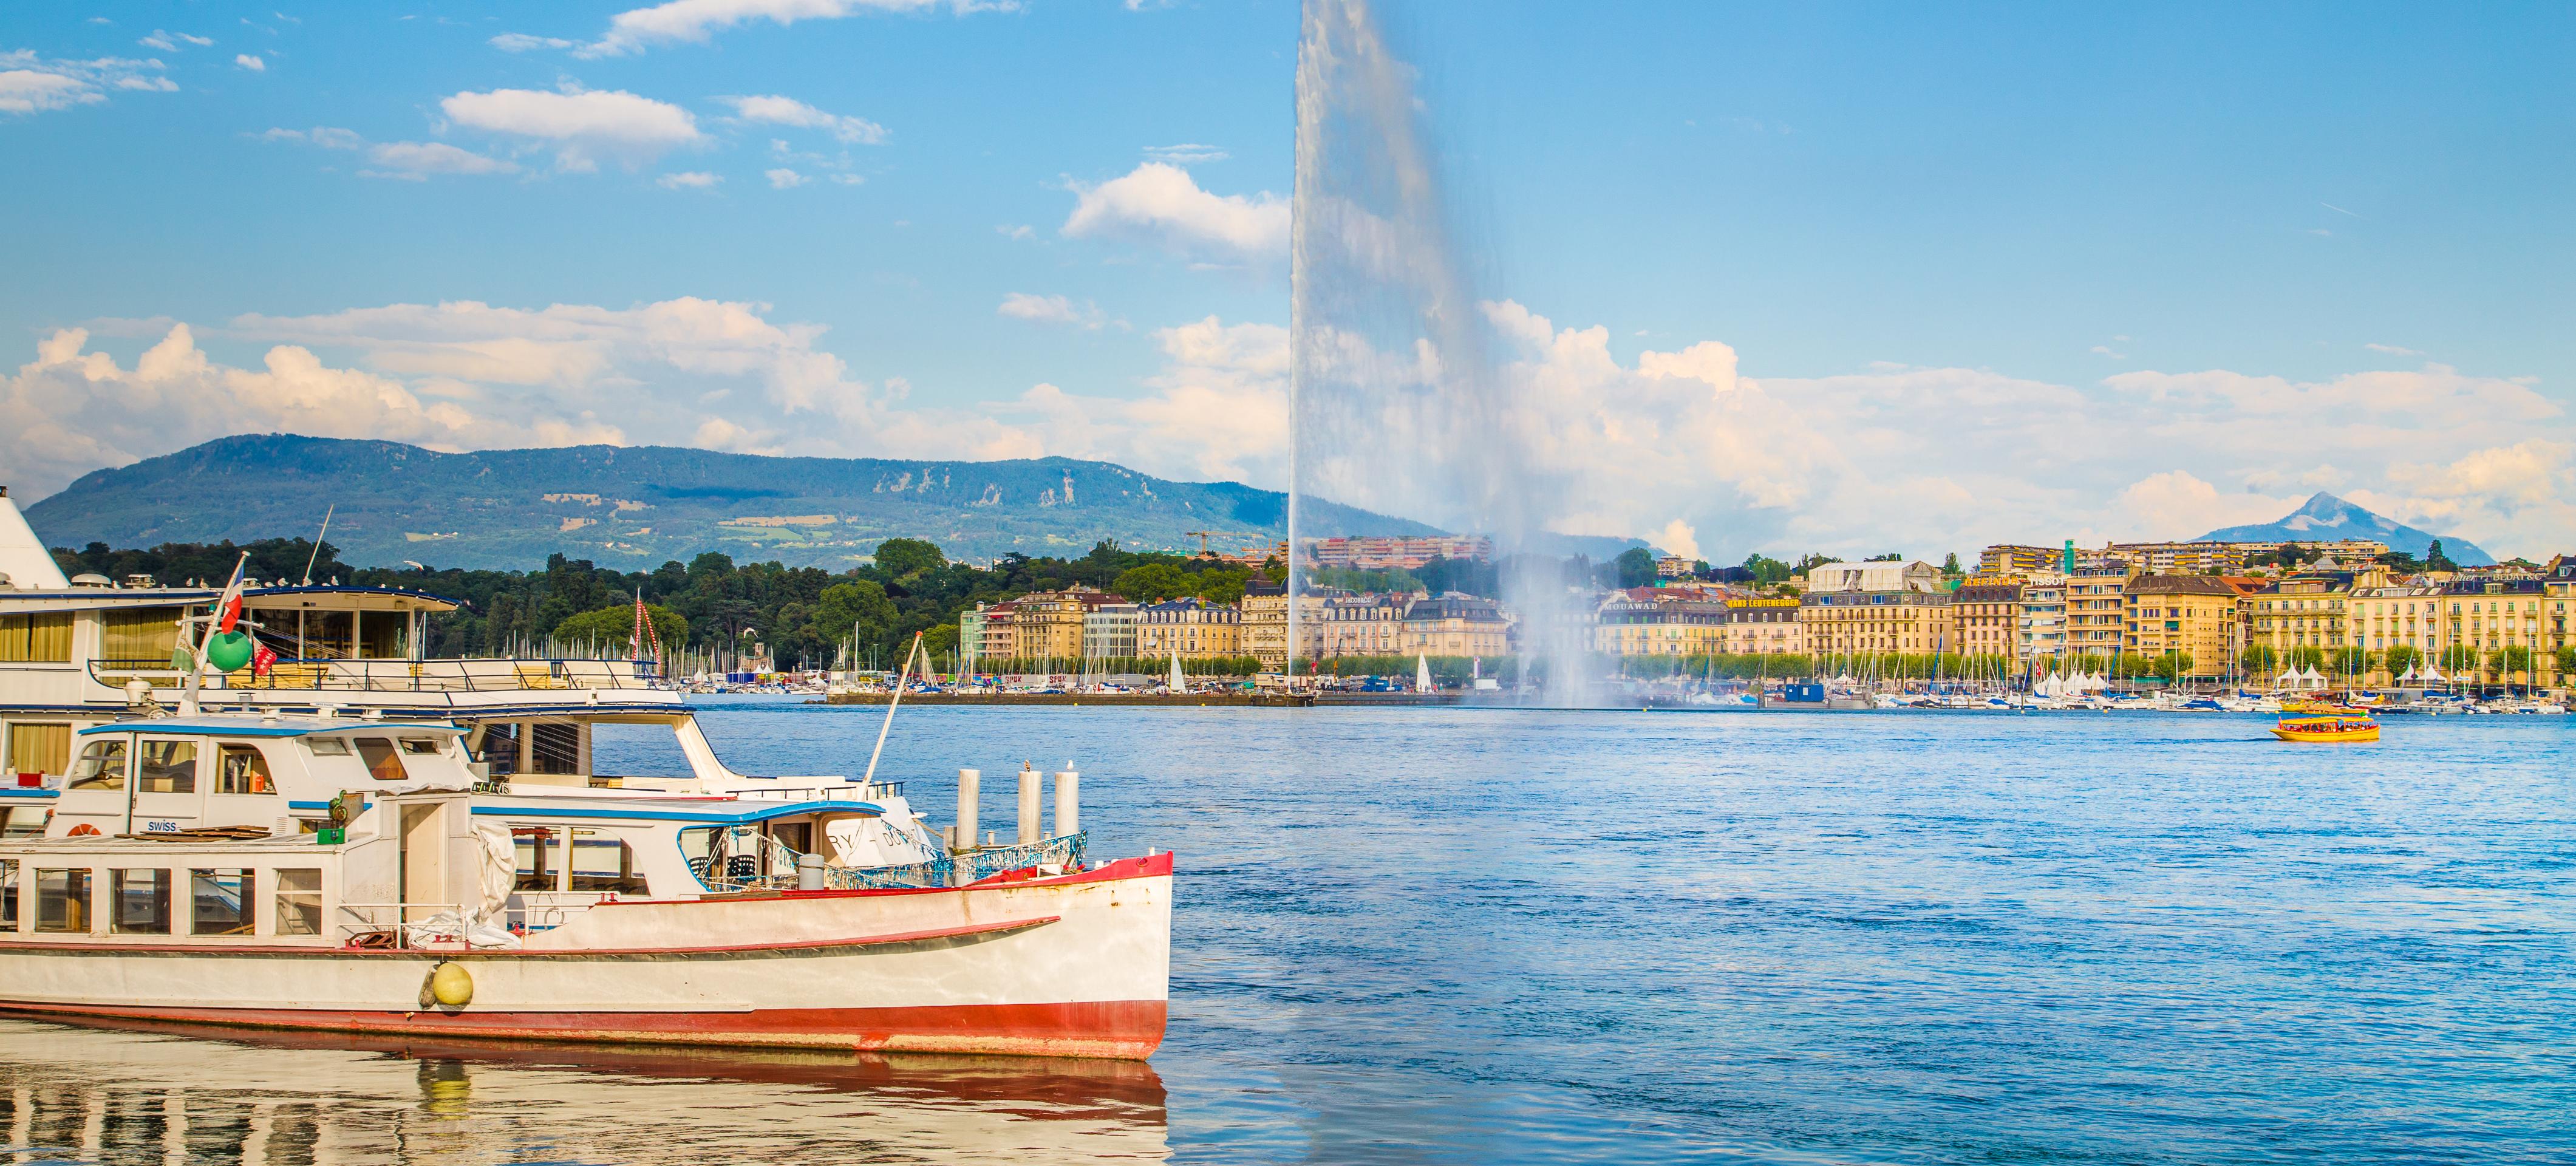 Geneva City Tour and Trip to Annecy – Cruise on Lake Geneva Optional